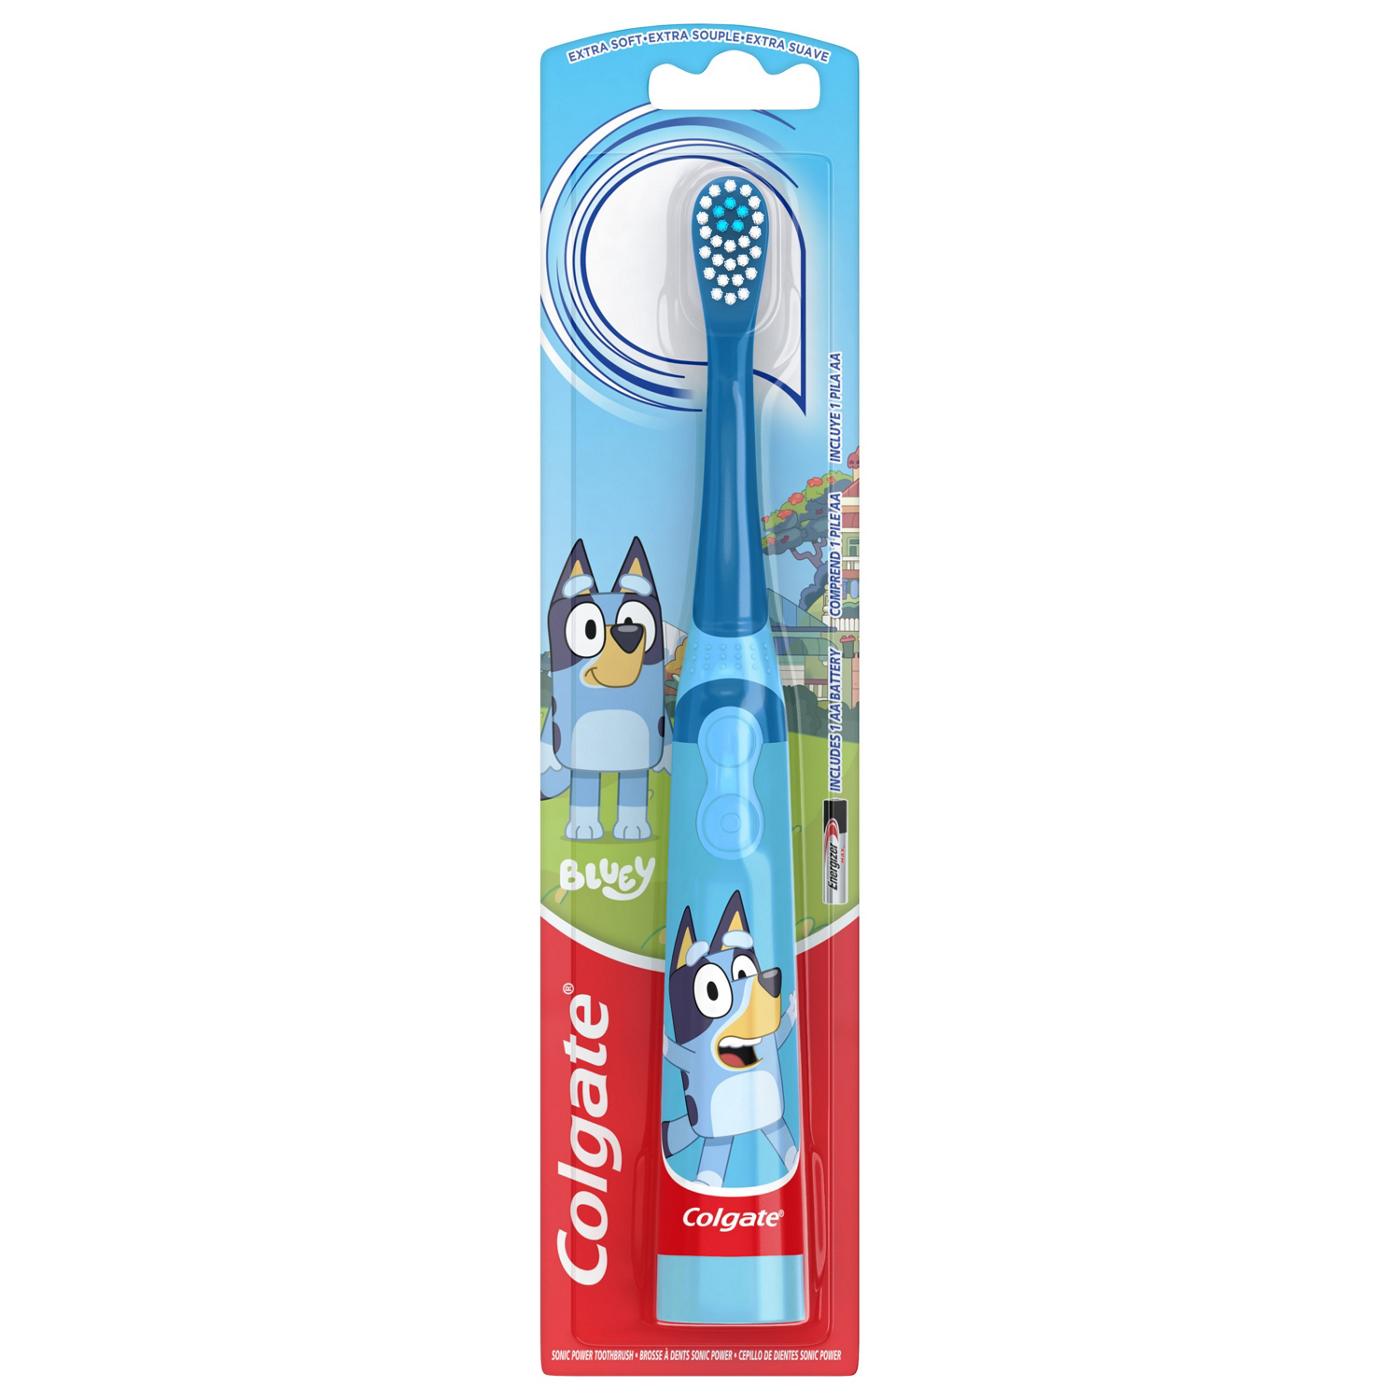 Colgate Kids Battery Toothbrush - Bluey; image 1 of 9